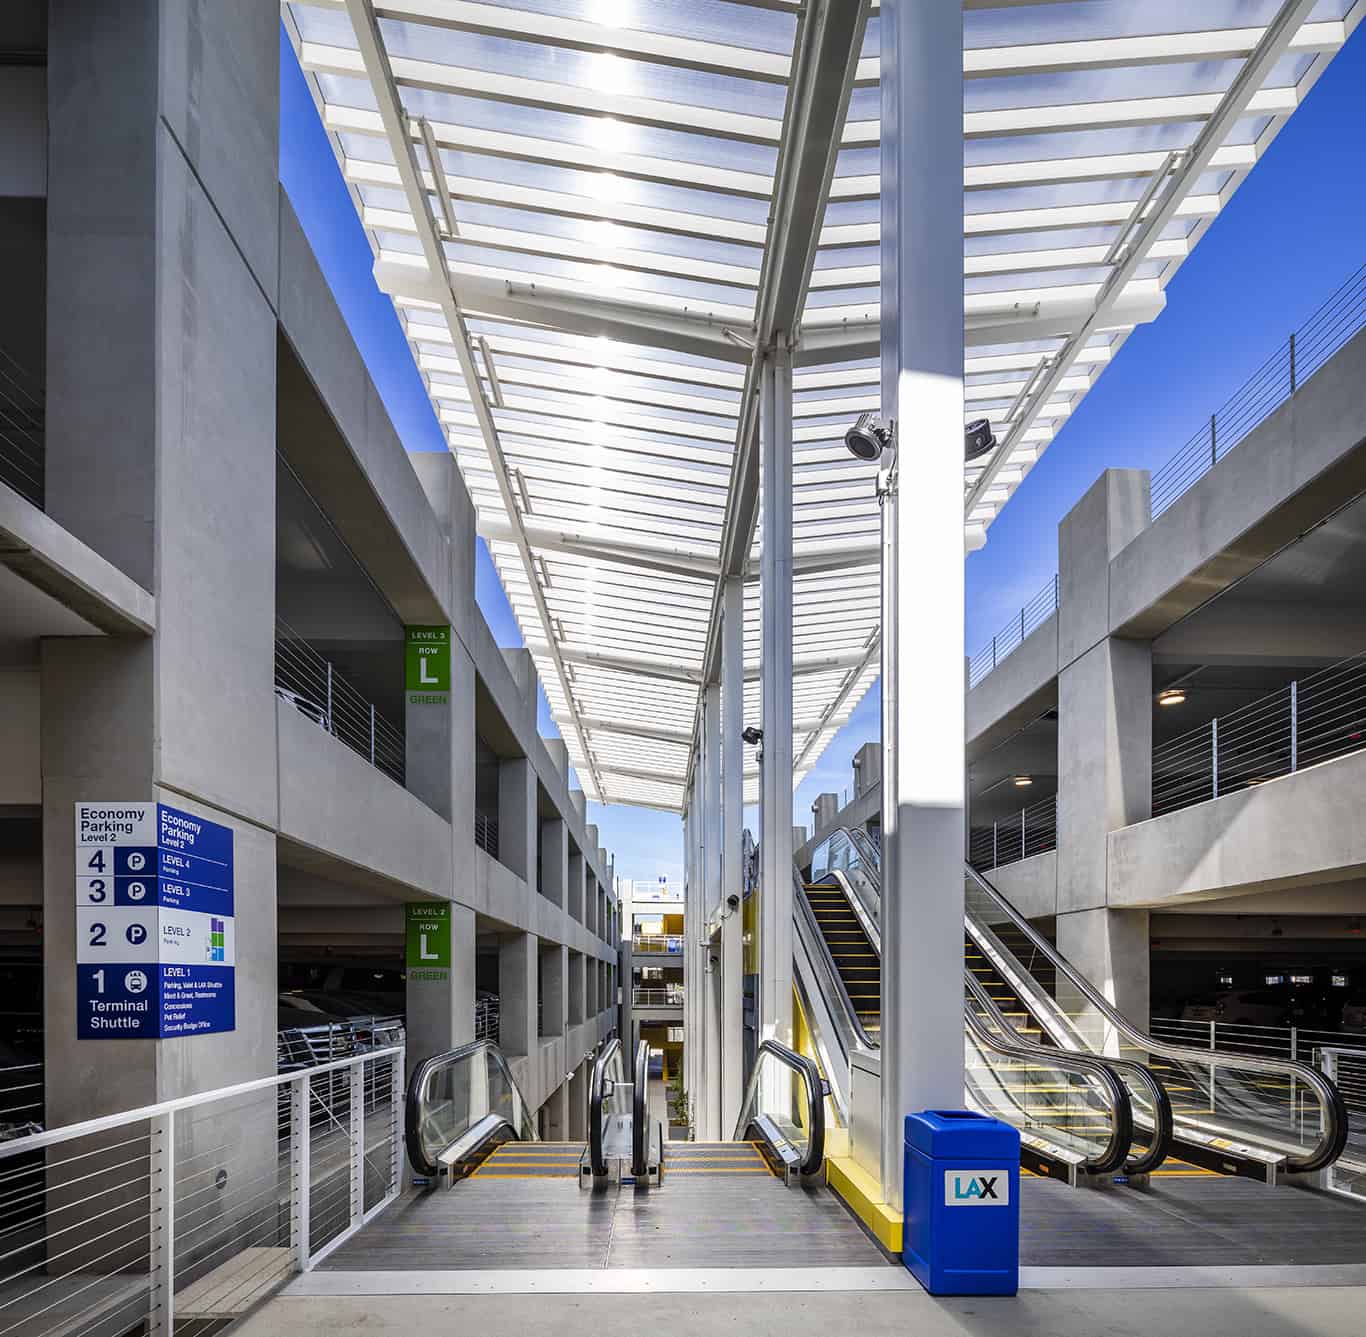 LAX Economy Parking Facility Canopies